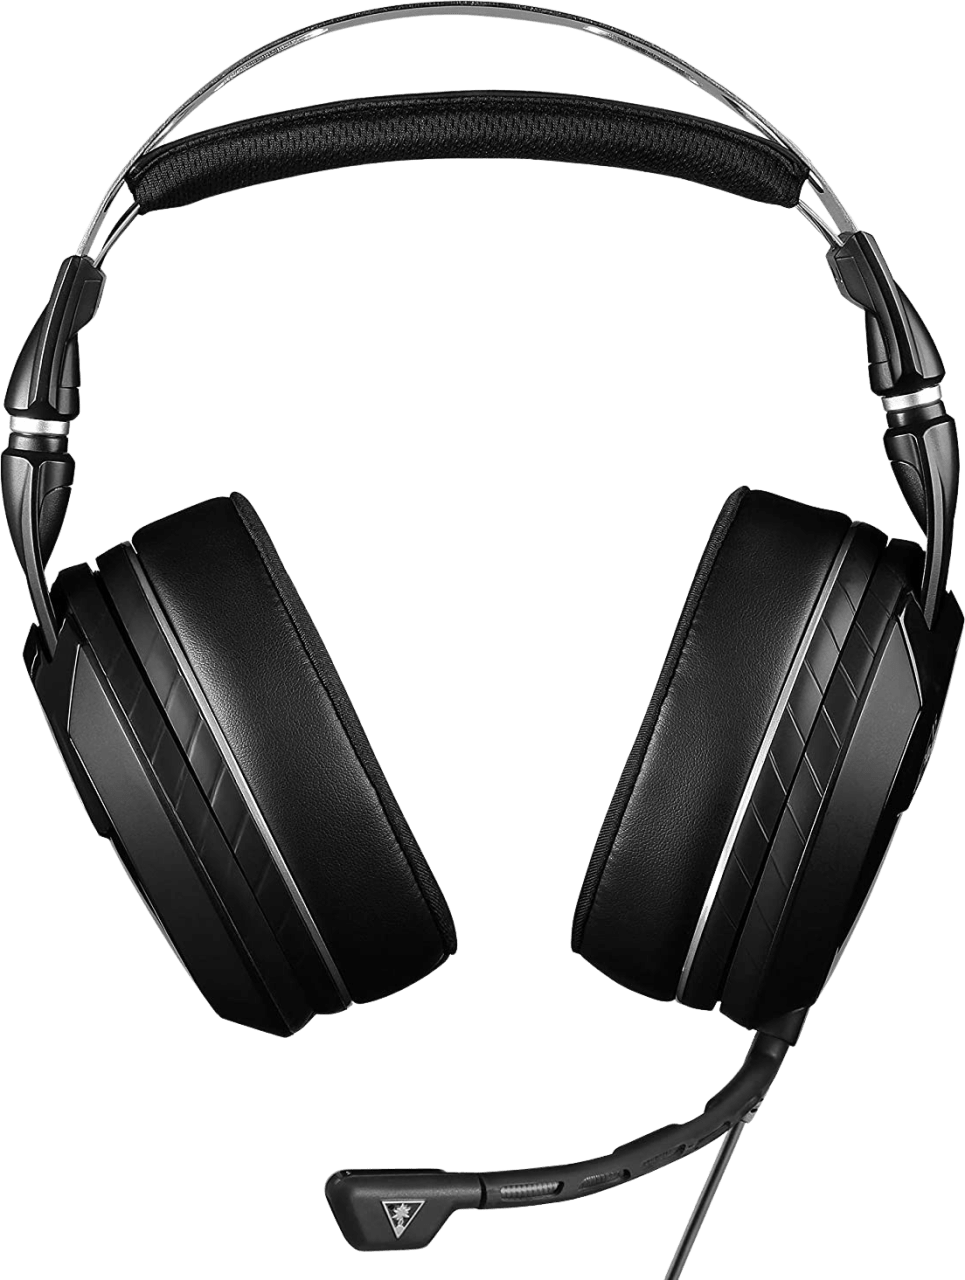 Black Turtle Beach Elite Pro 2 + SuperAmp (Playstation) Over-ear Gaming Headphones.2